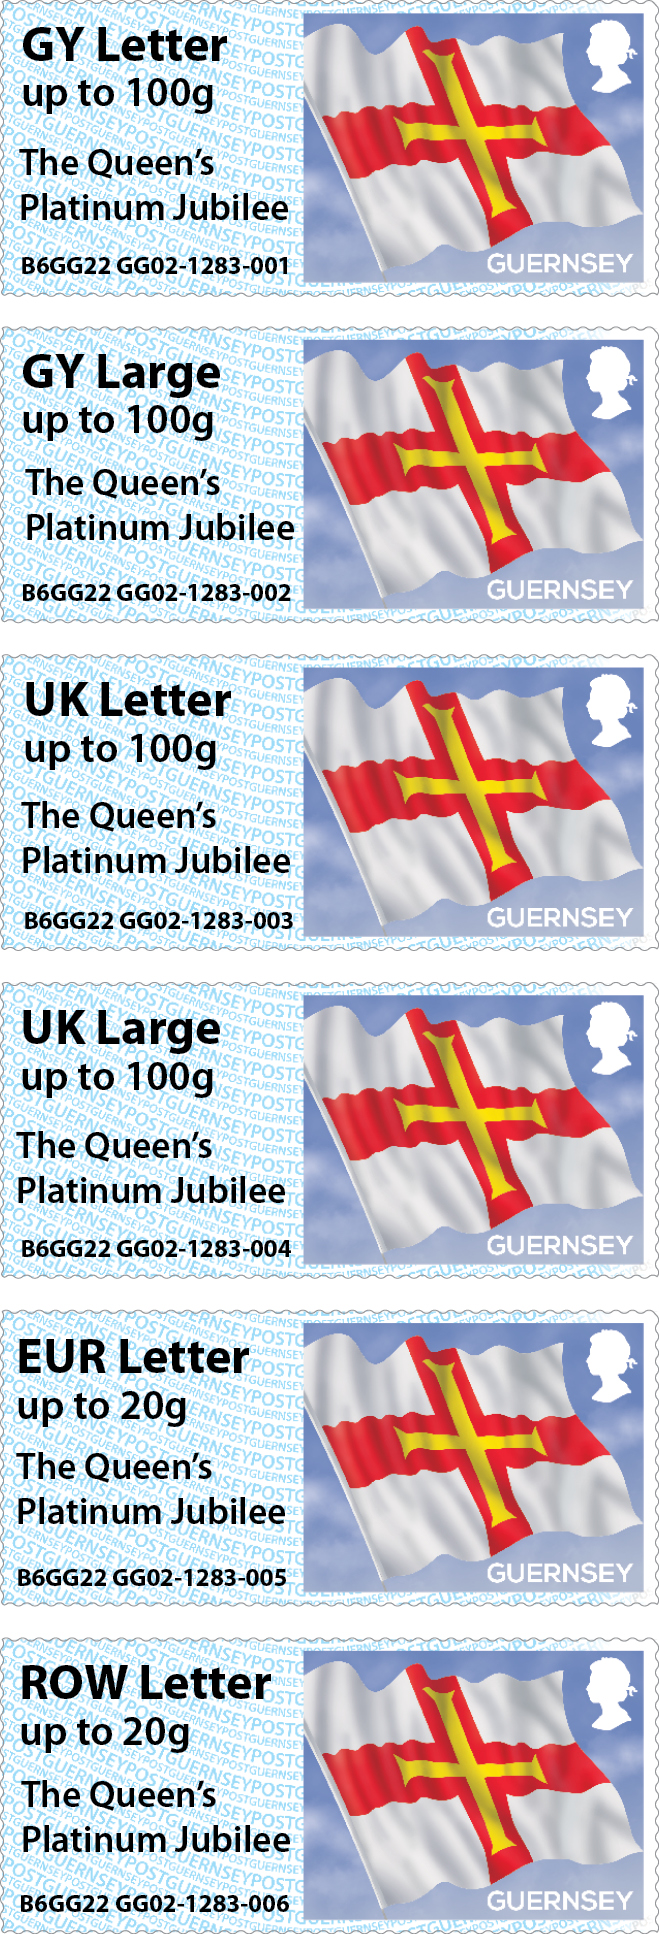 The Queen's Platinum Jubilee Guernsey Flag overprint